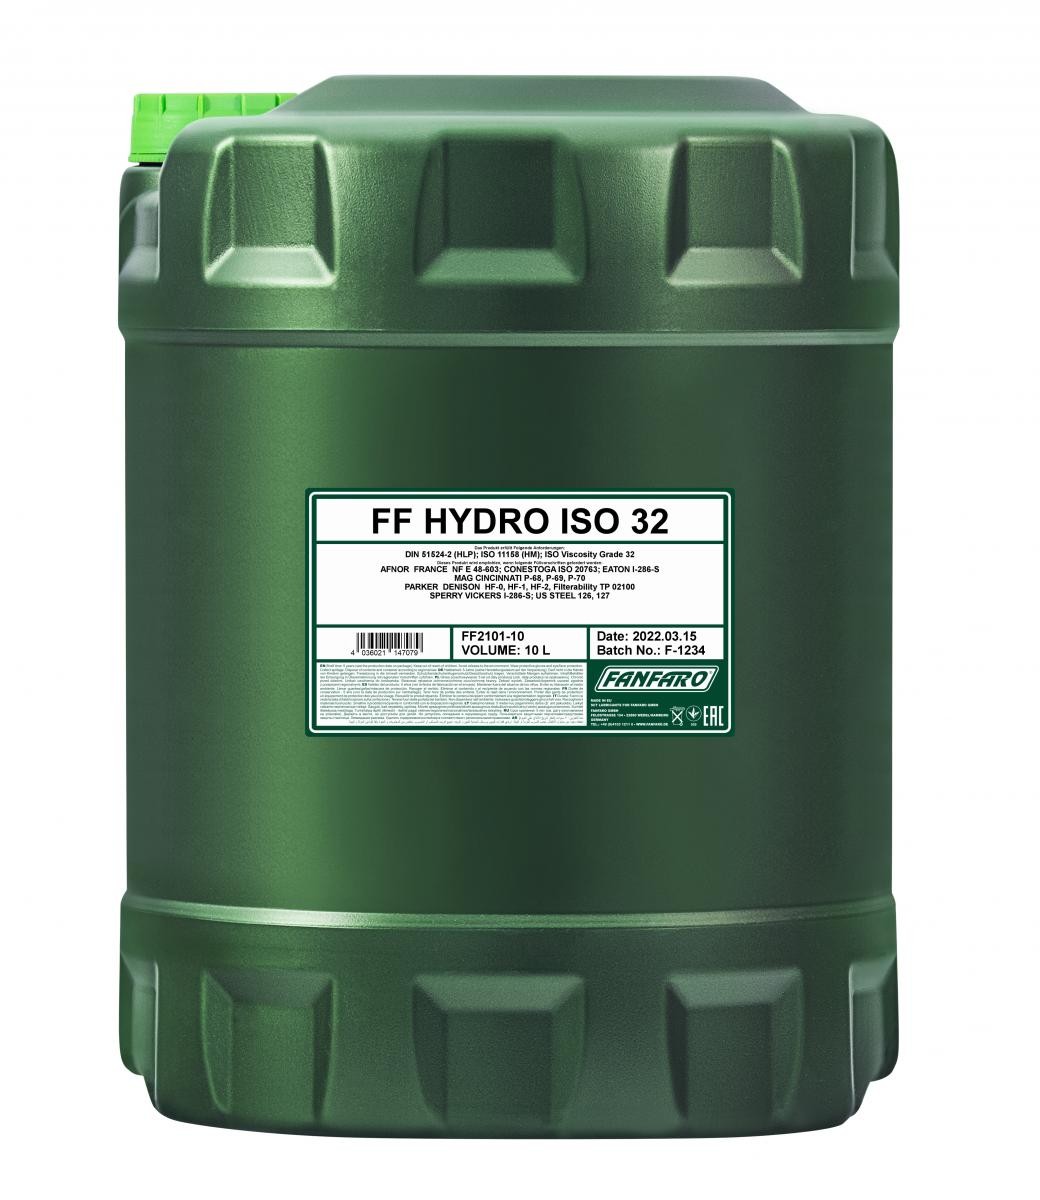 LKW Hydrauliköl FANFARO FF2101-10 kaufen